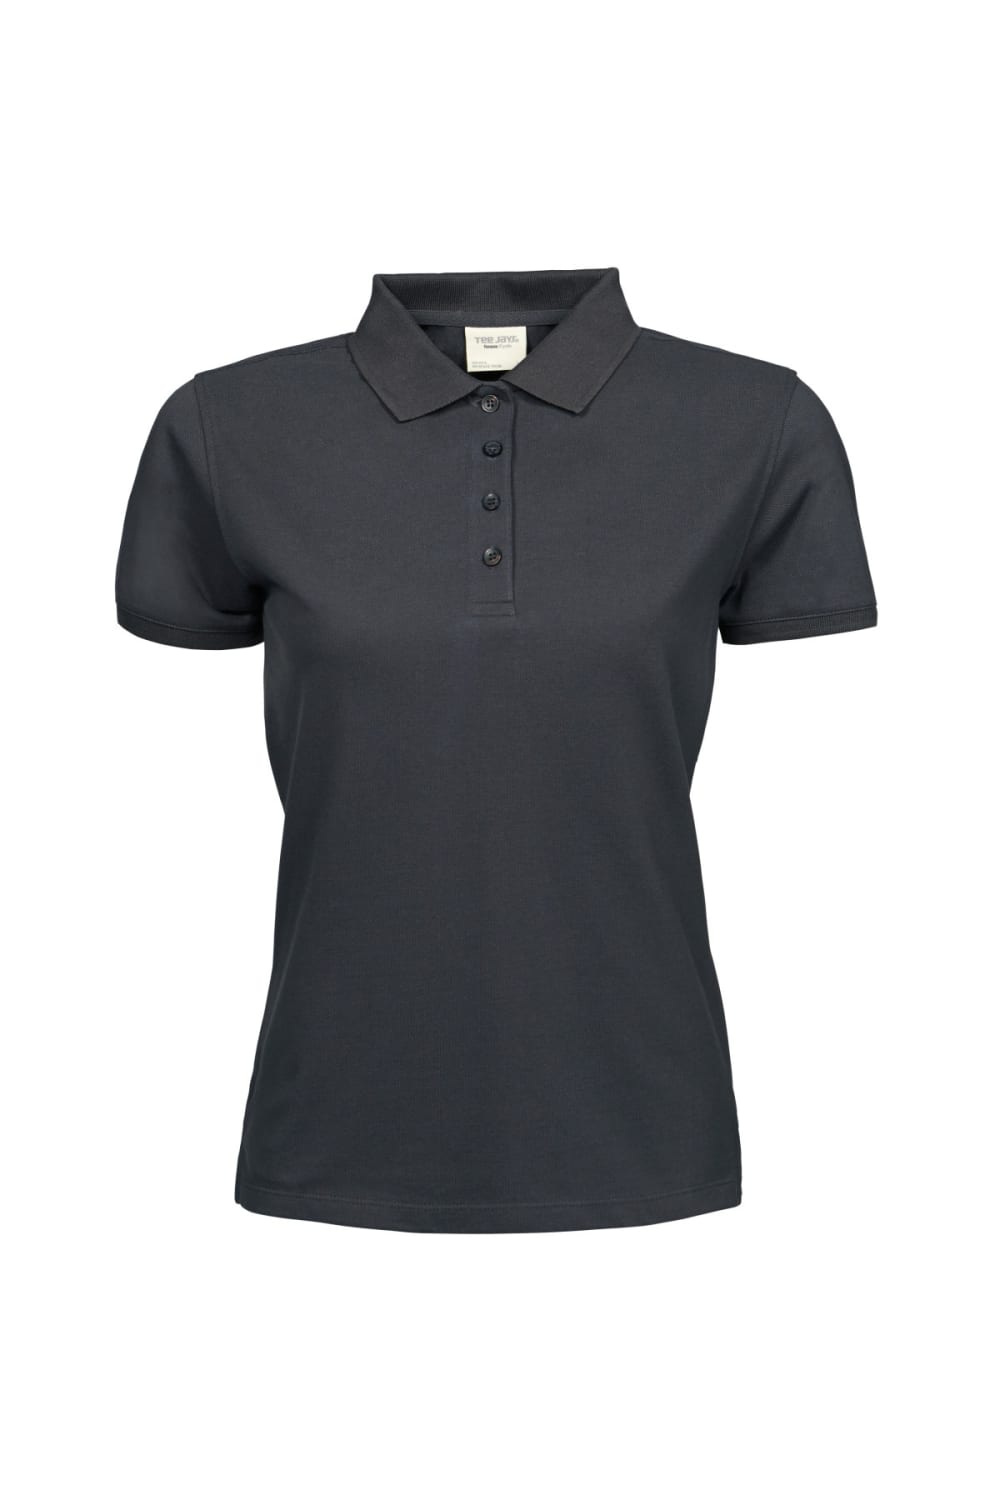 Tee Jays Womens/Ladies Heavy Short Sleeve Polo Shirt (Dark Grey)